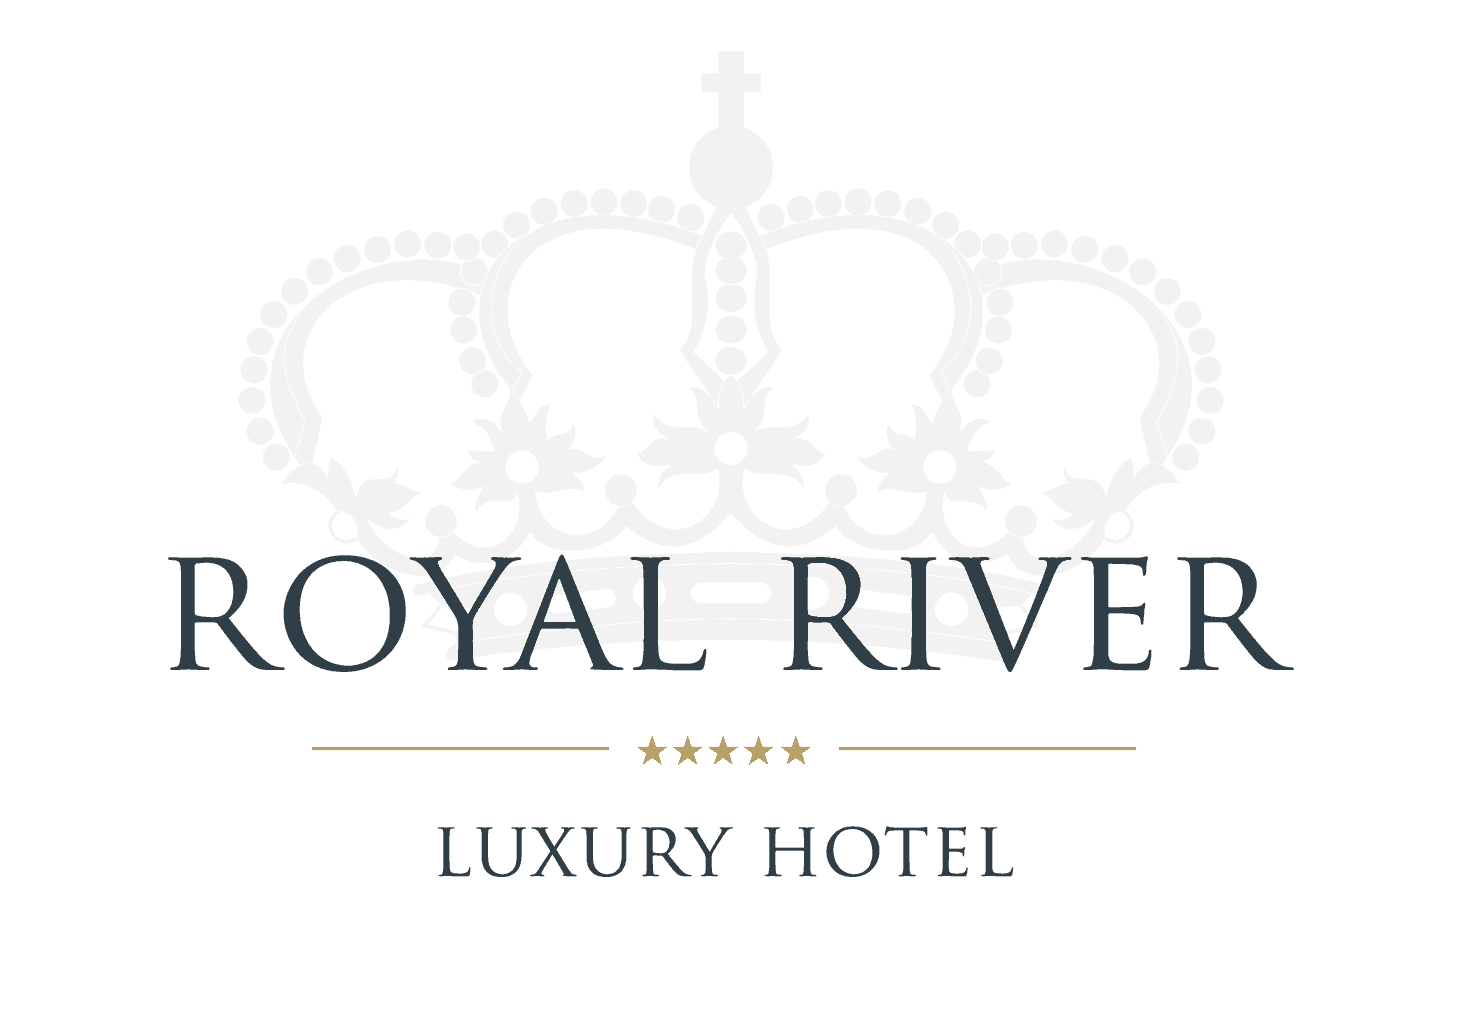 Royal River Luxury Hotel - Tenerife